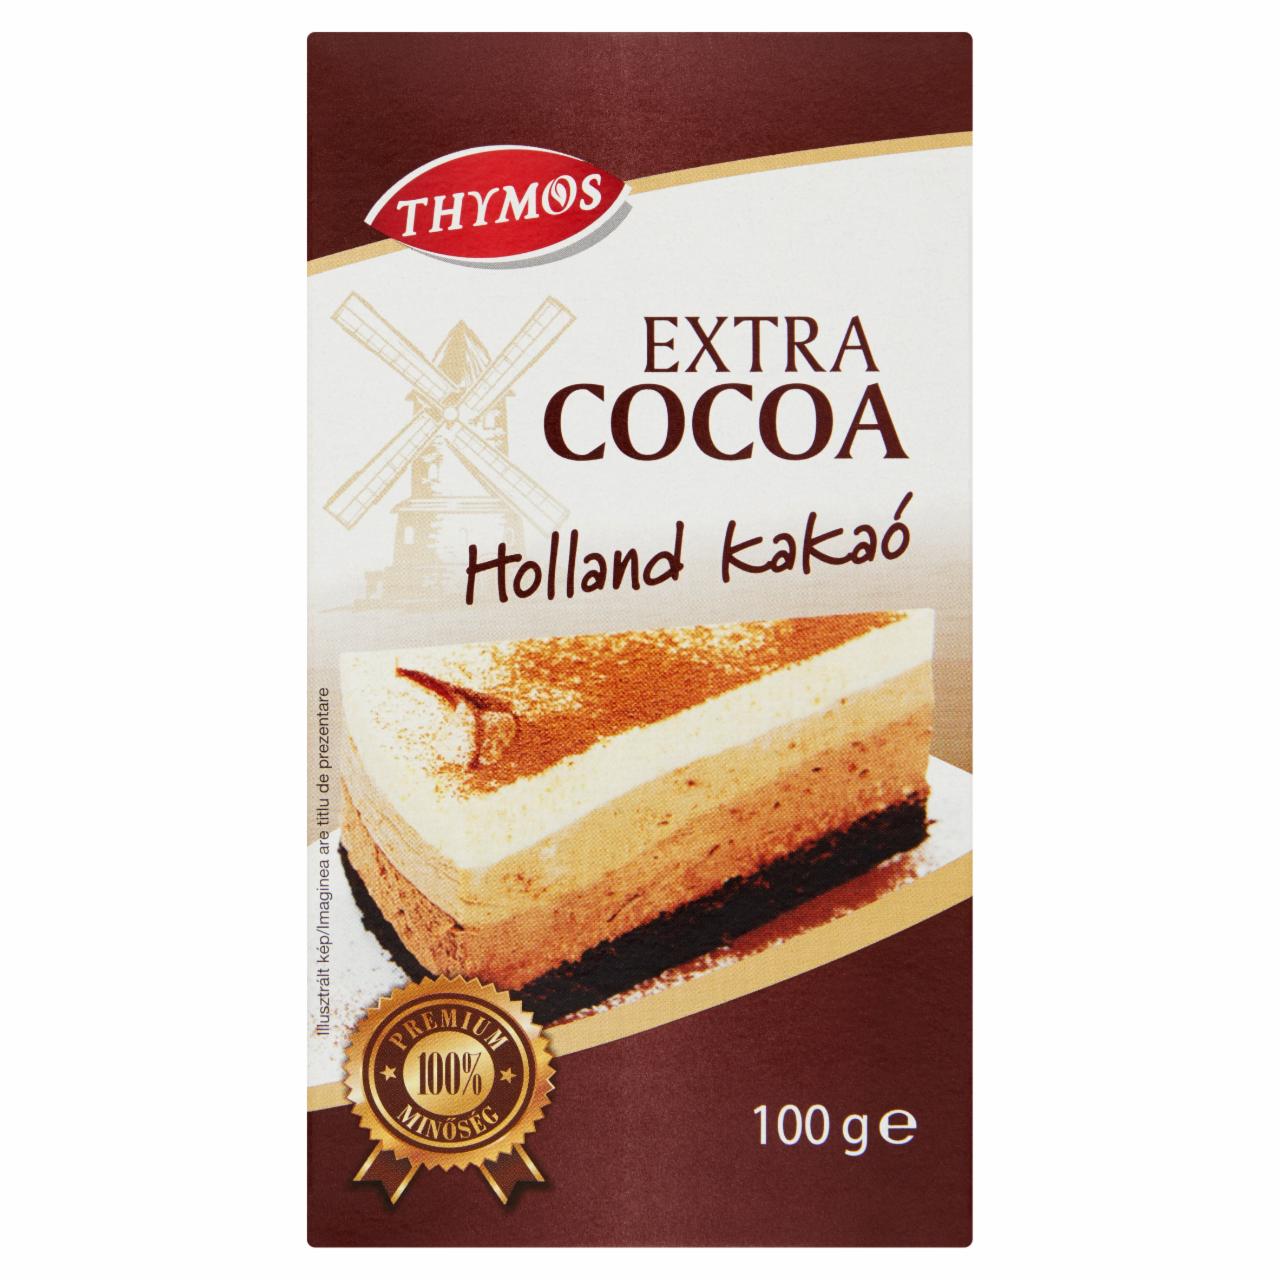 Képek - Thymos Extra Cocoa holland kakaópor 100 g